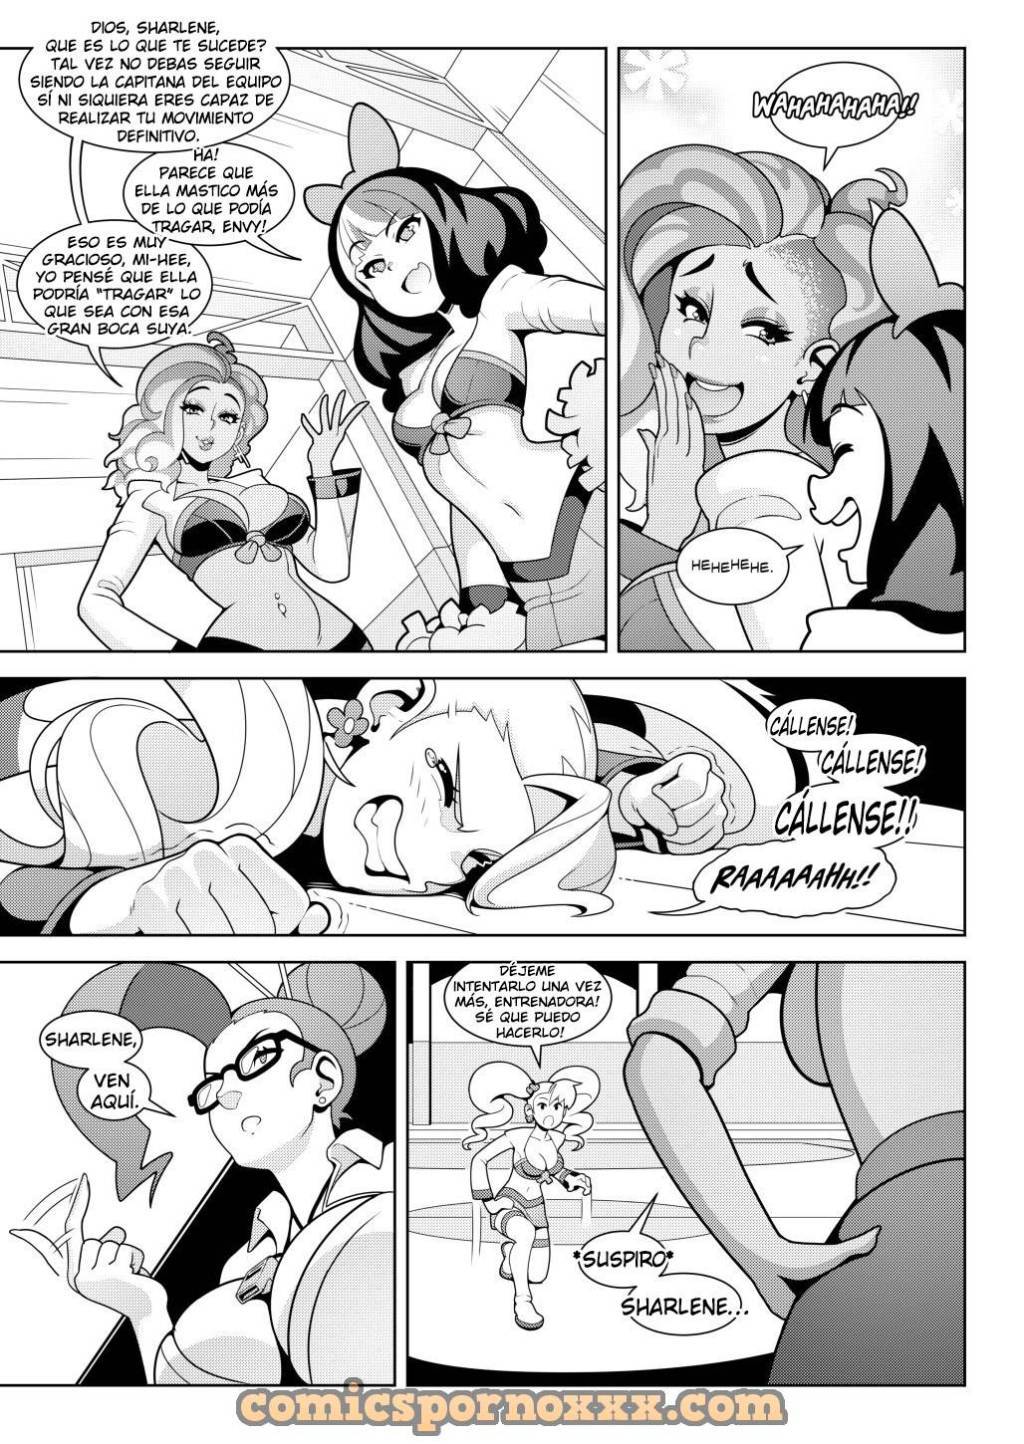 Hot Shit High! #2 - 5 - Comics Porno - Hentai Manga - Cartoon XXX